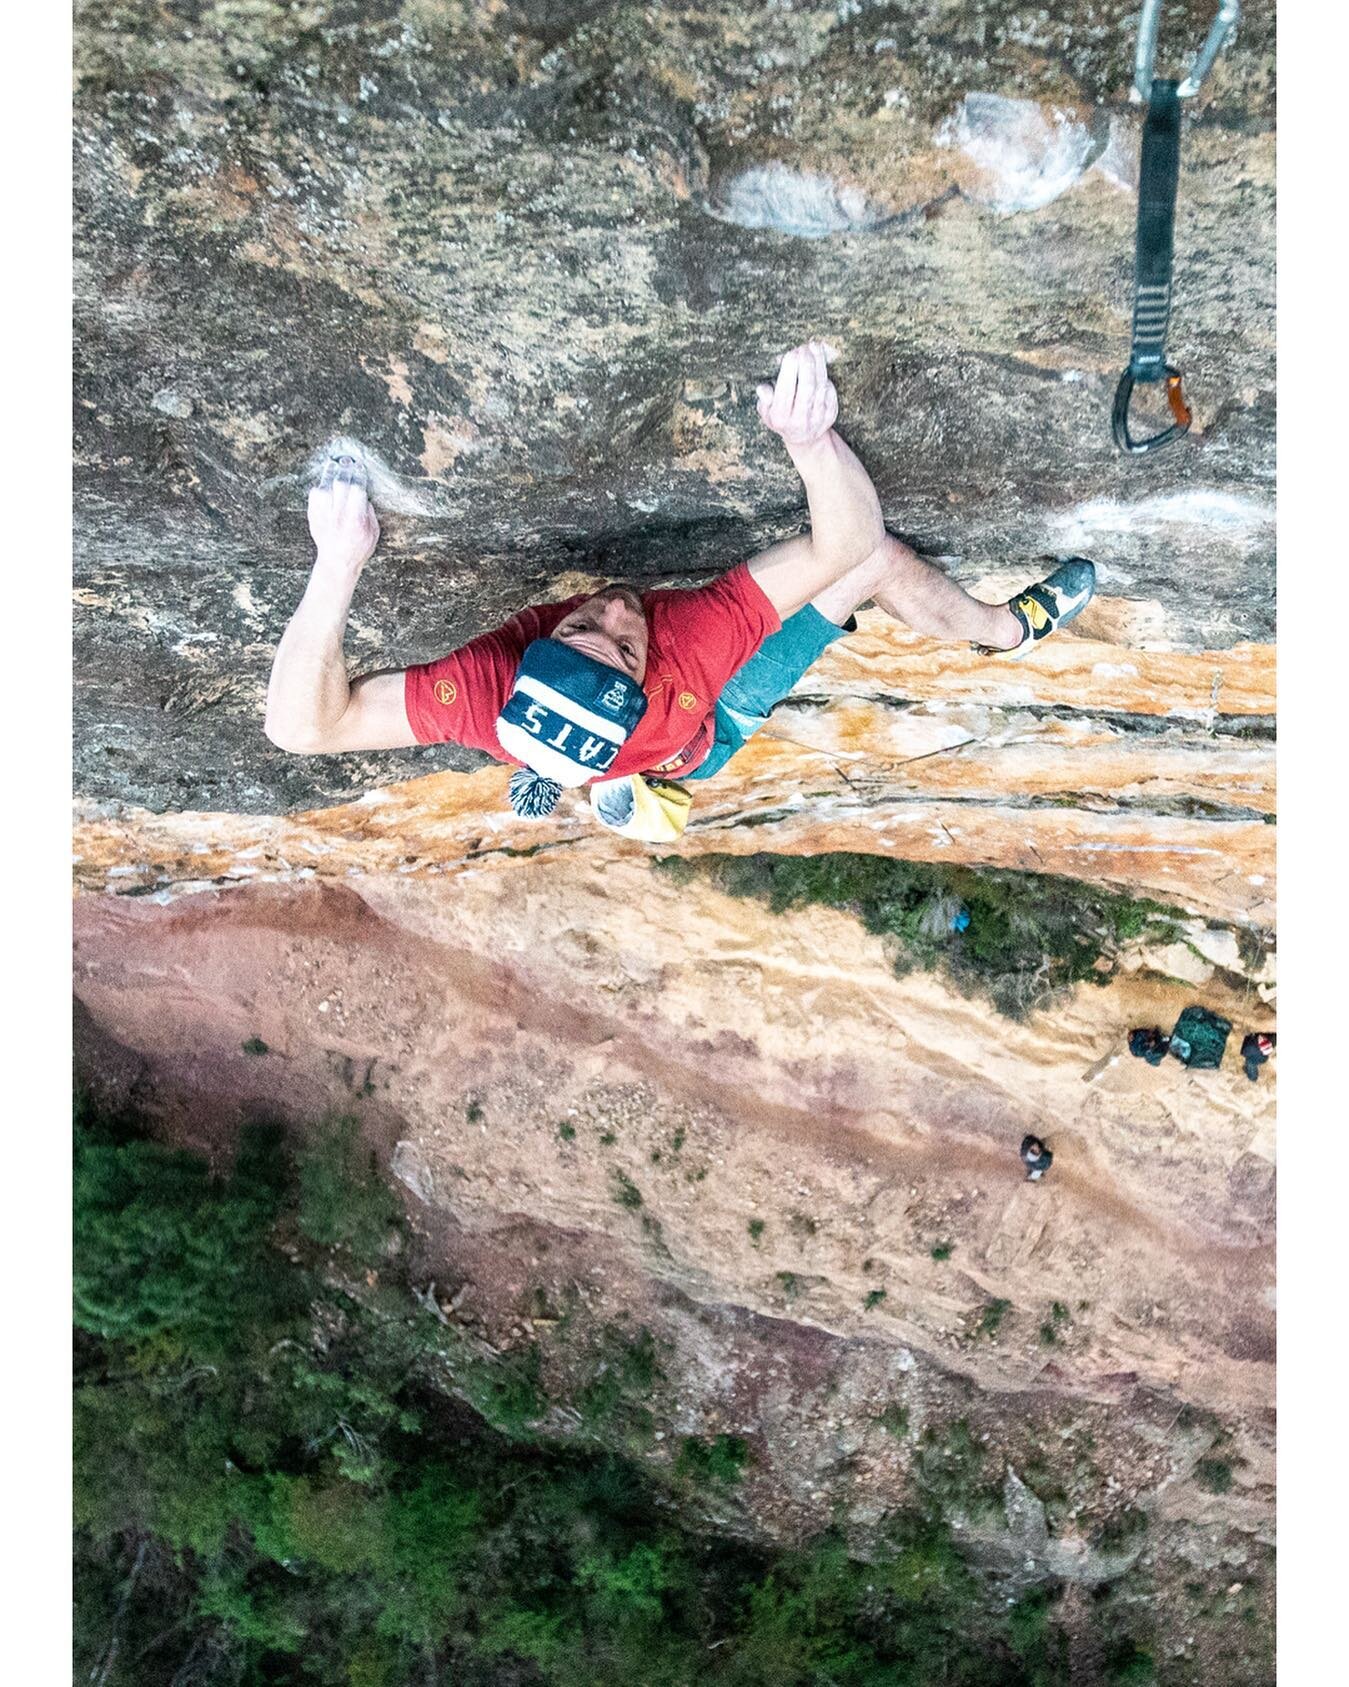 @jake_bresnehan // Elphinstone 
.
.
.
@lasportivaaustralia @team_edelrid #climbing #climb #bluemountains #outside #outdoor #explore #rumblr #rumblrfilms #uppermtns #geelongcats #adventure #gripped #grippedmagazine #c_l_i_m_b